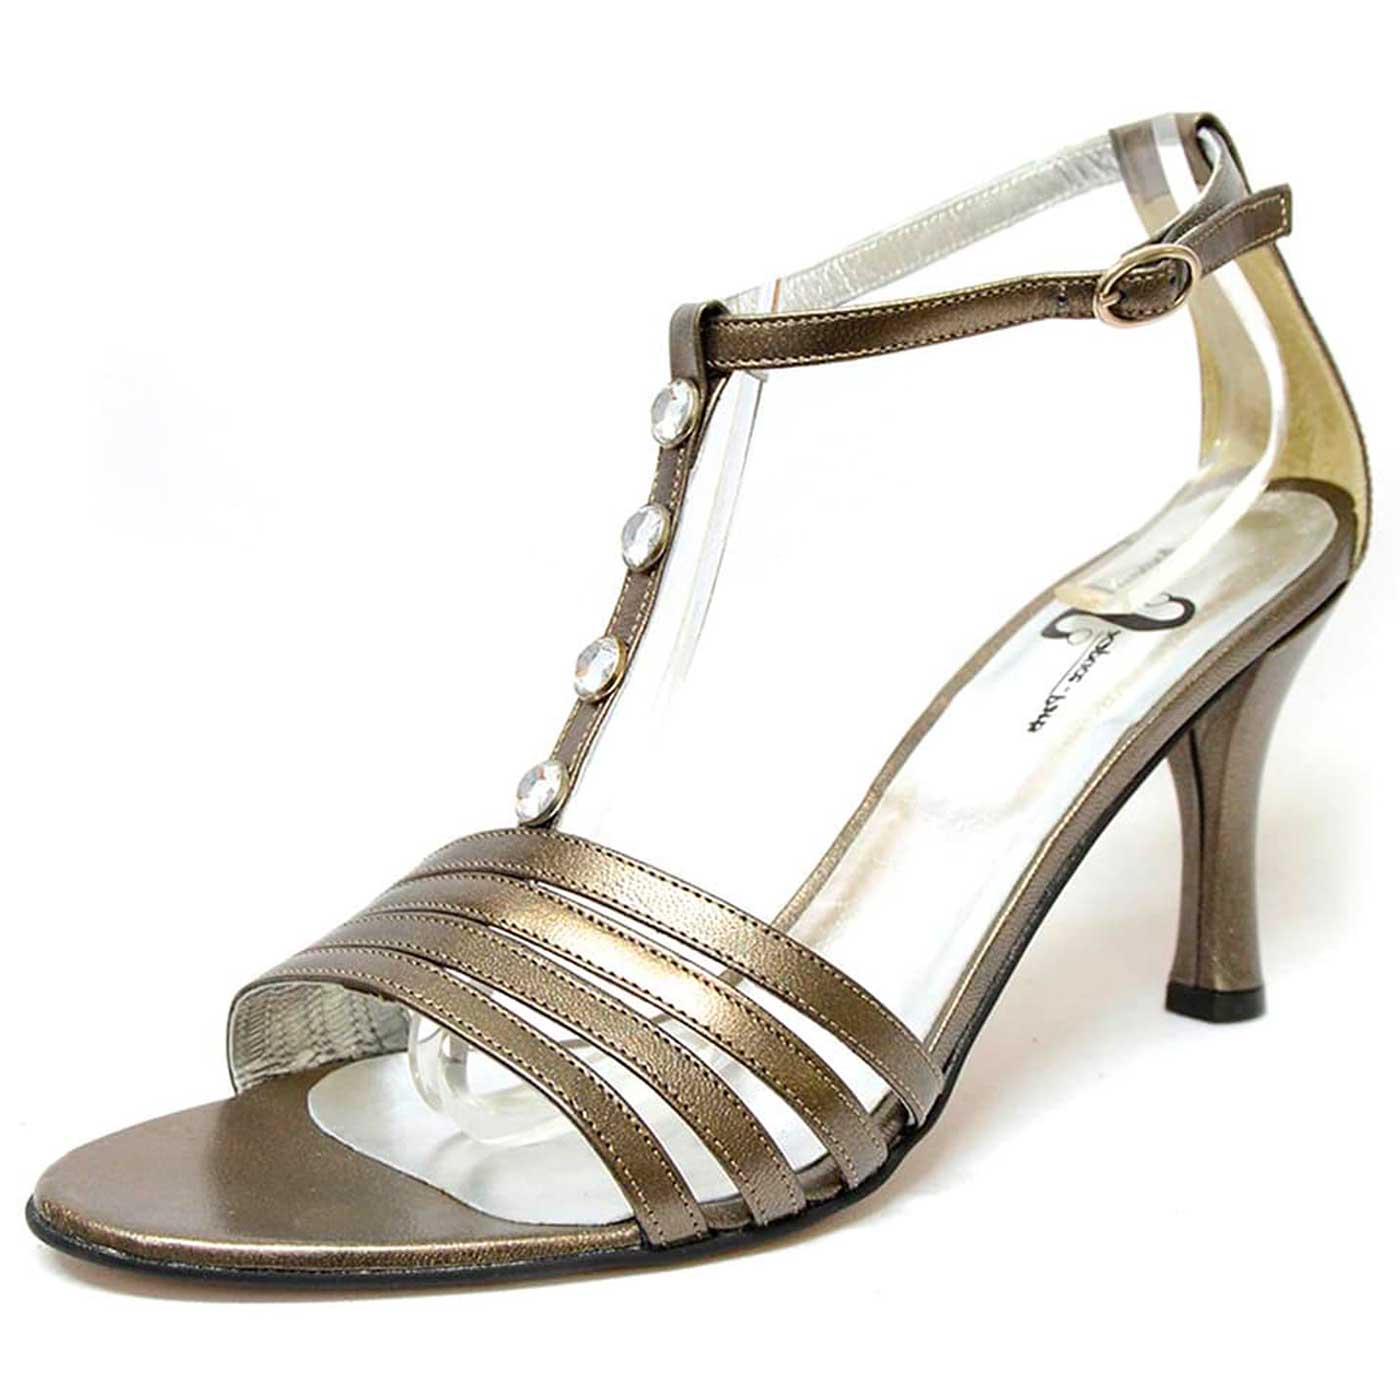 sandales cuir lisse bronze metallise, chaussures femme grande taille